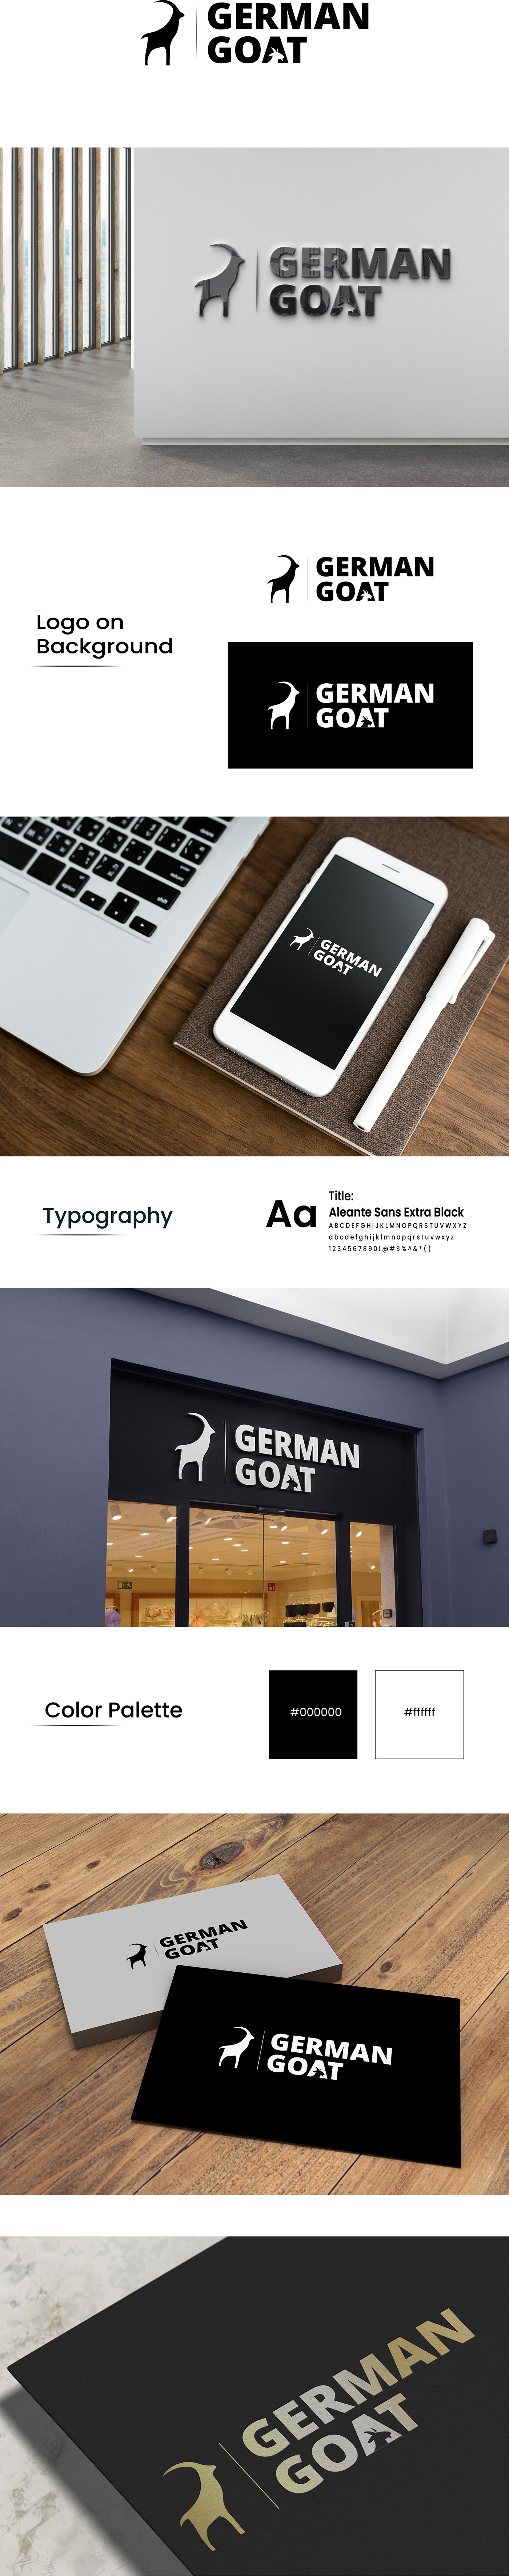 text screenshot design anik balar vasuki infotech ravi balar logo Mockup german goat